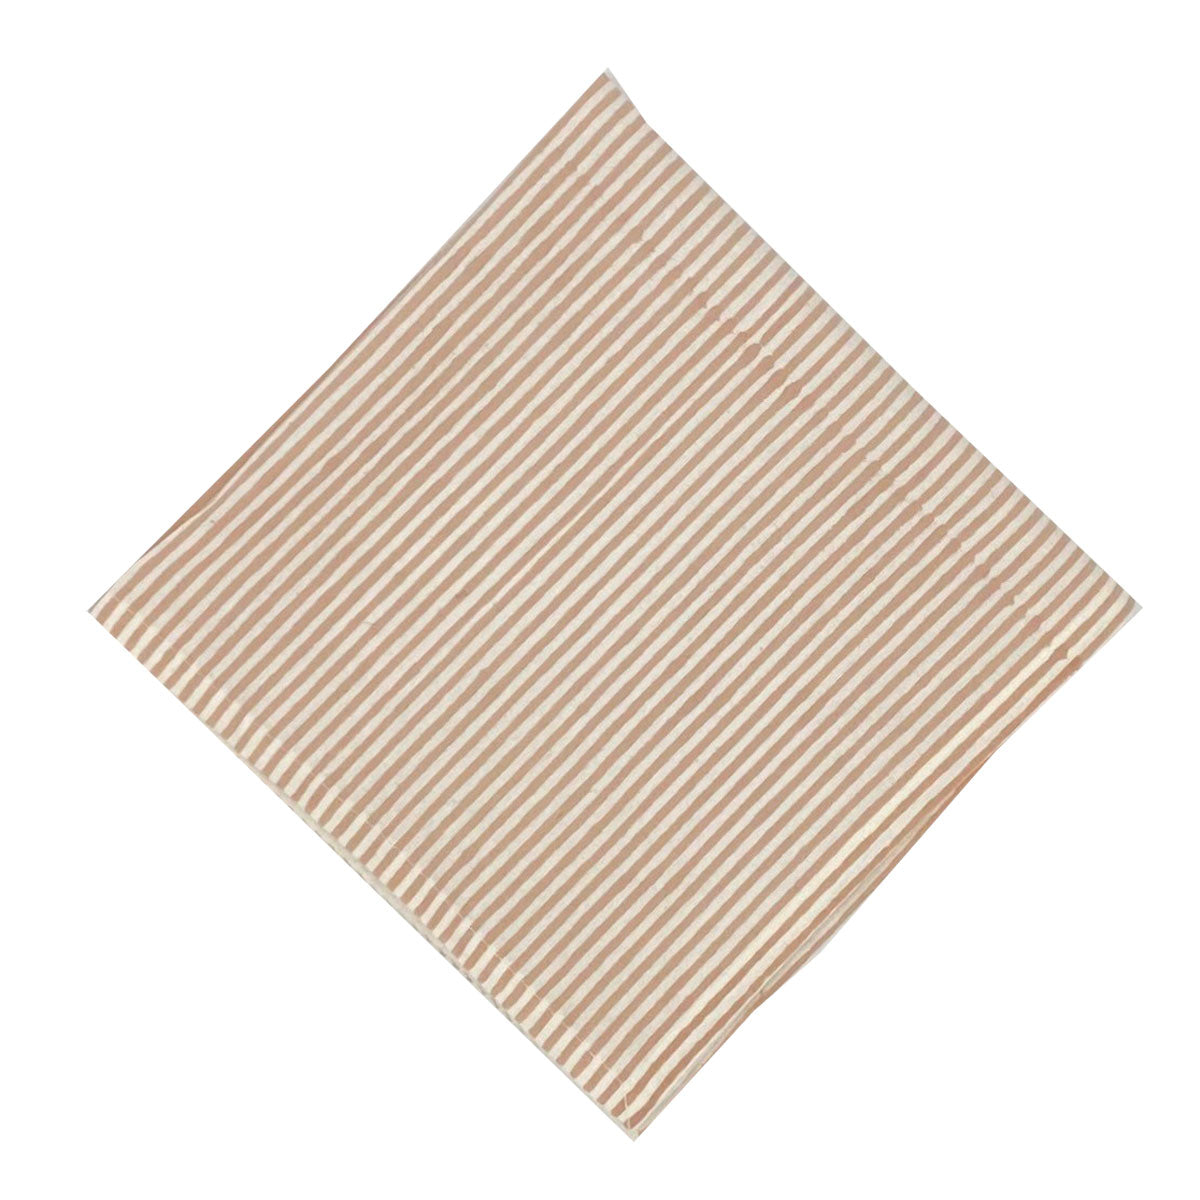 SALMON Striped Blockprint Napkins